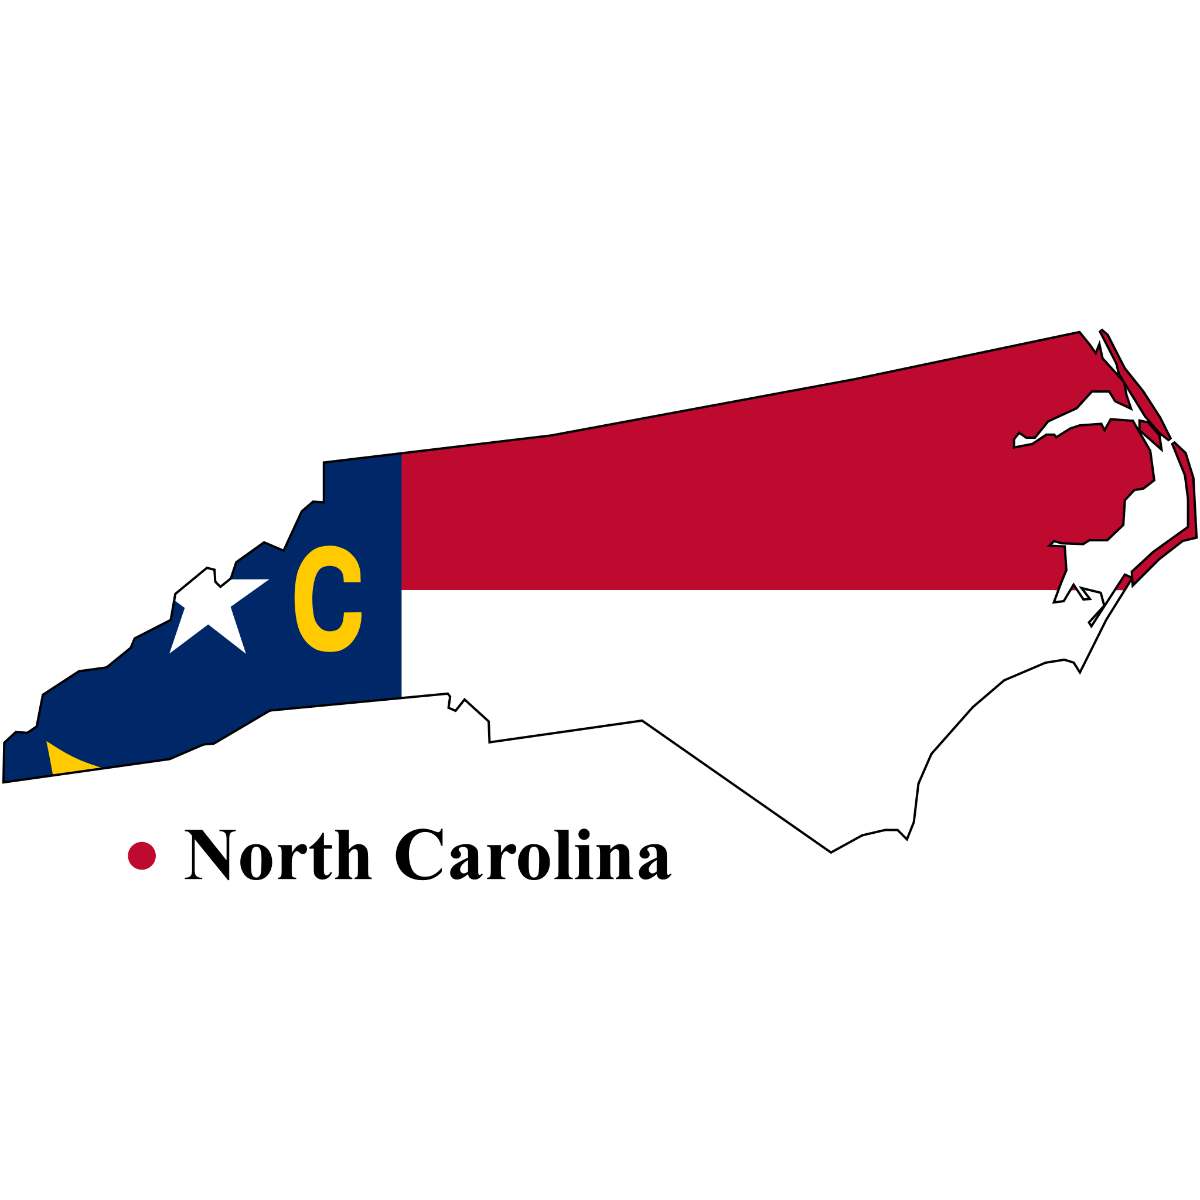 North Carolina State map cutout with North Carolina flag superimposed